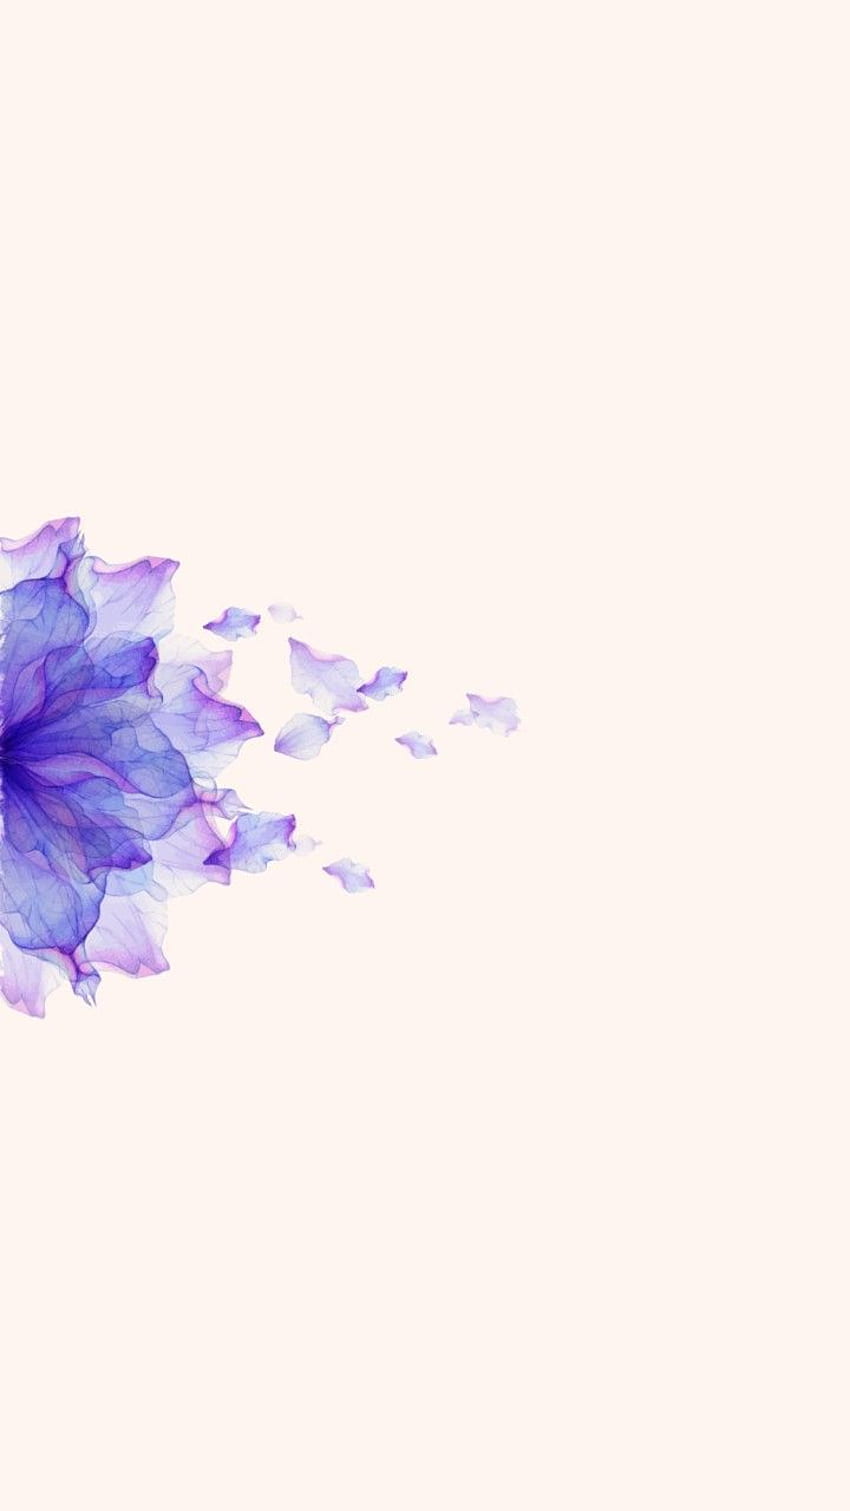 Sabareesh Cv en ♡. Iphone simple, Florido, Minimalista, Flores púrpuras minimalistas fondo de pantalla del teléfono